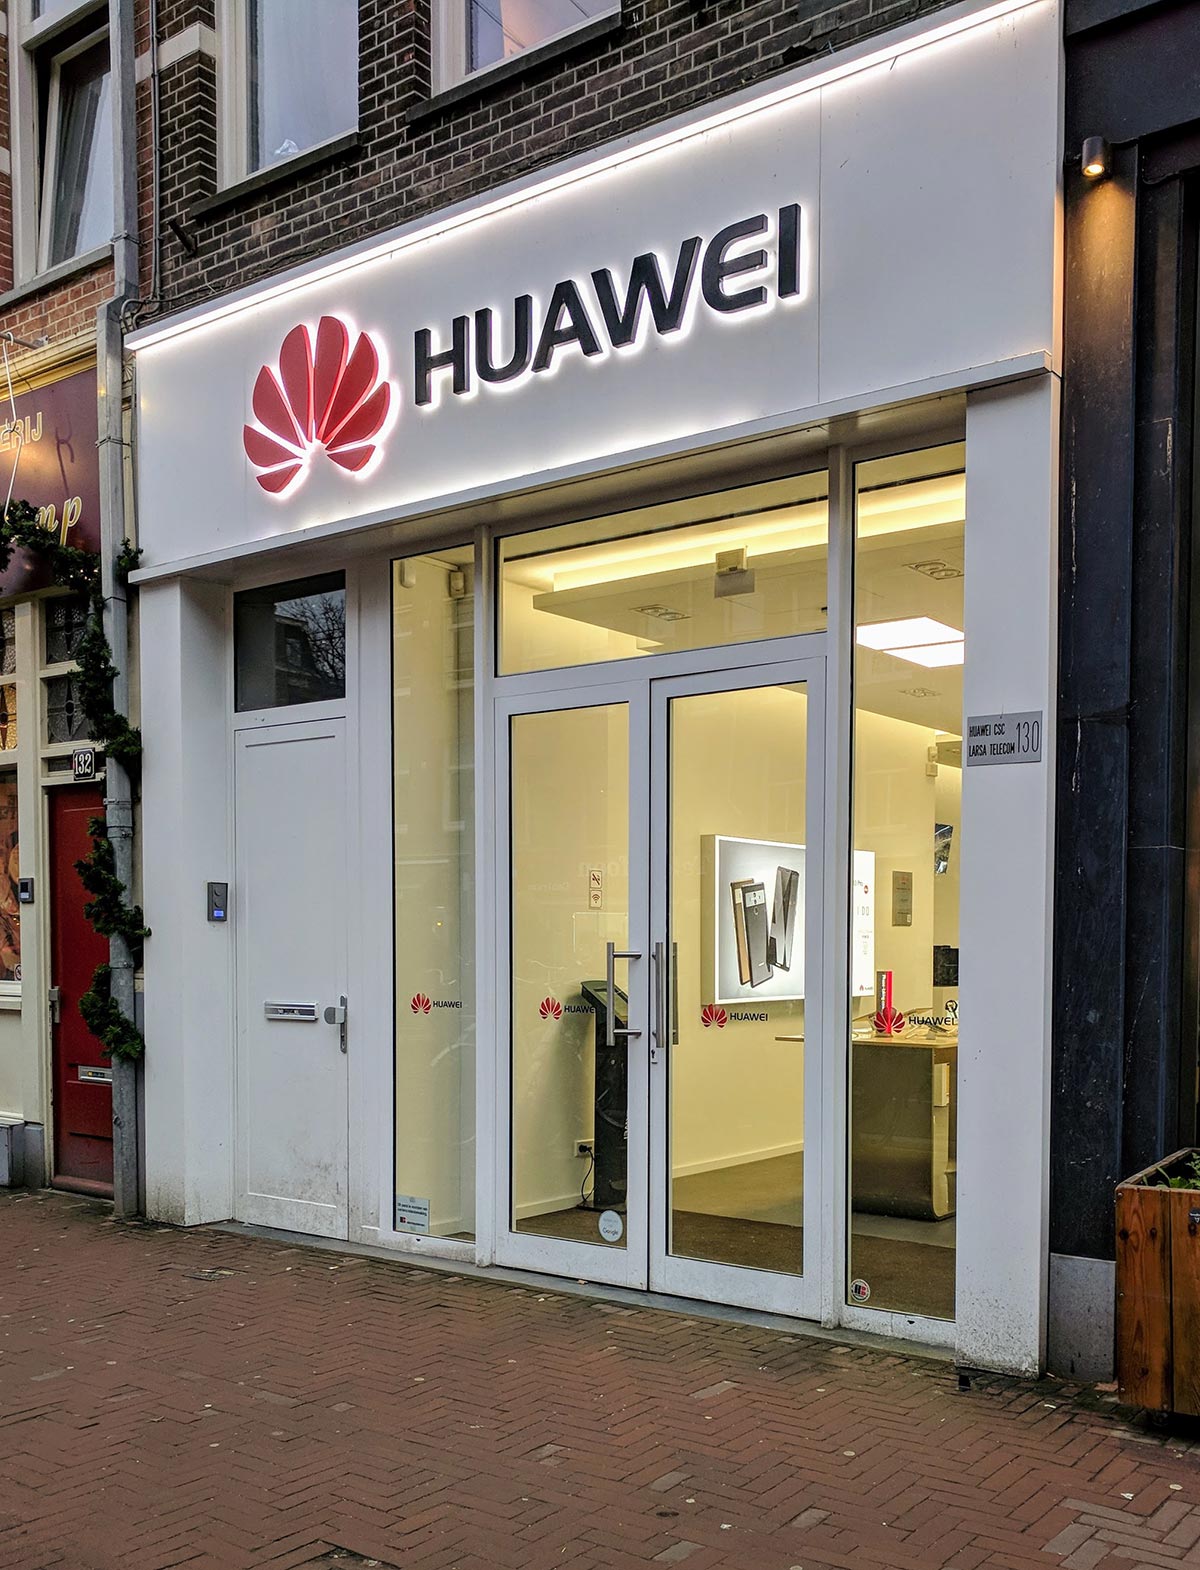 Huawei mobile phone shop window display